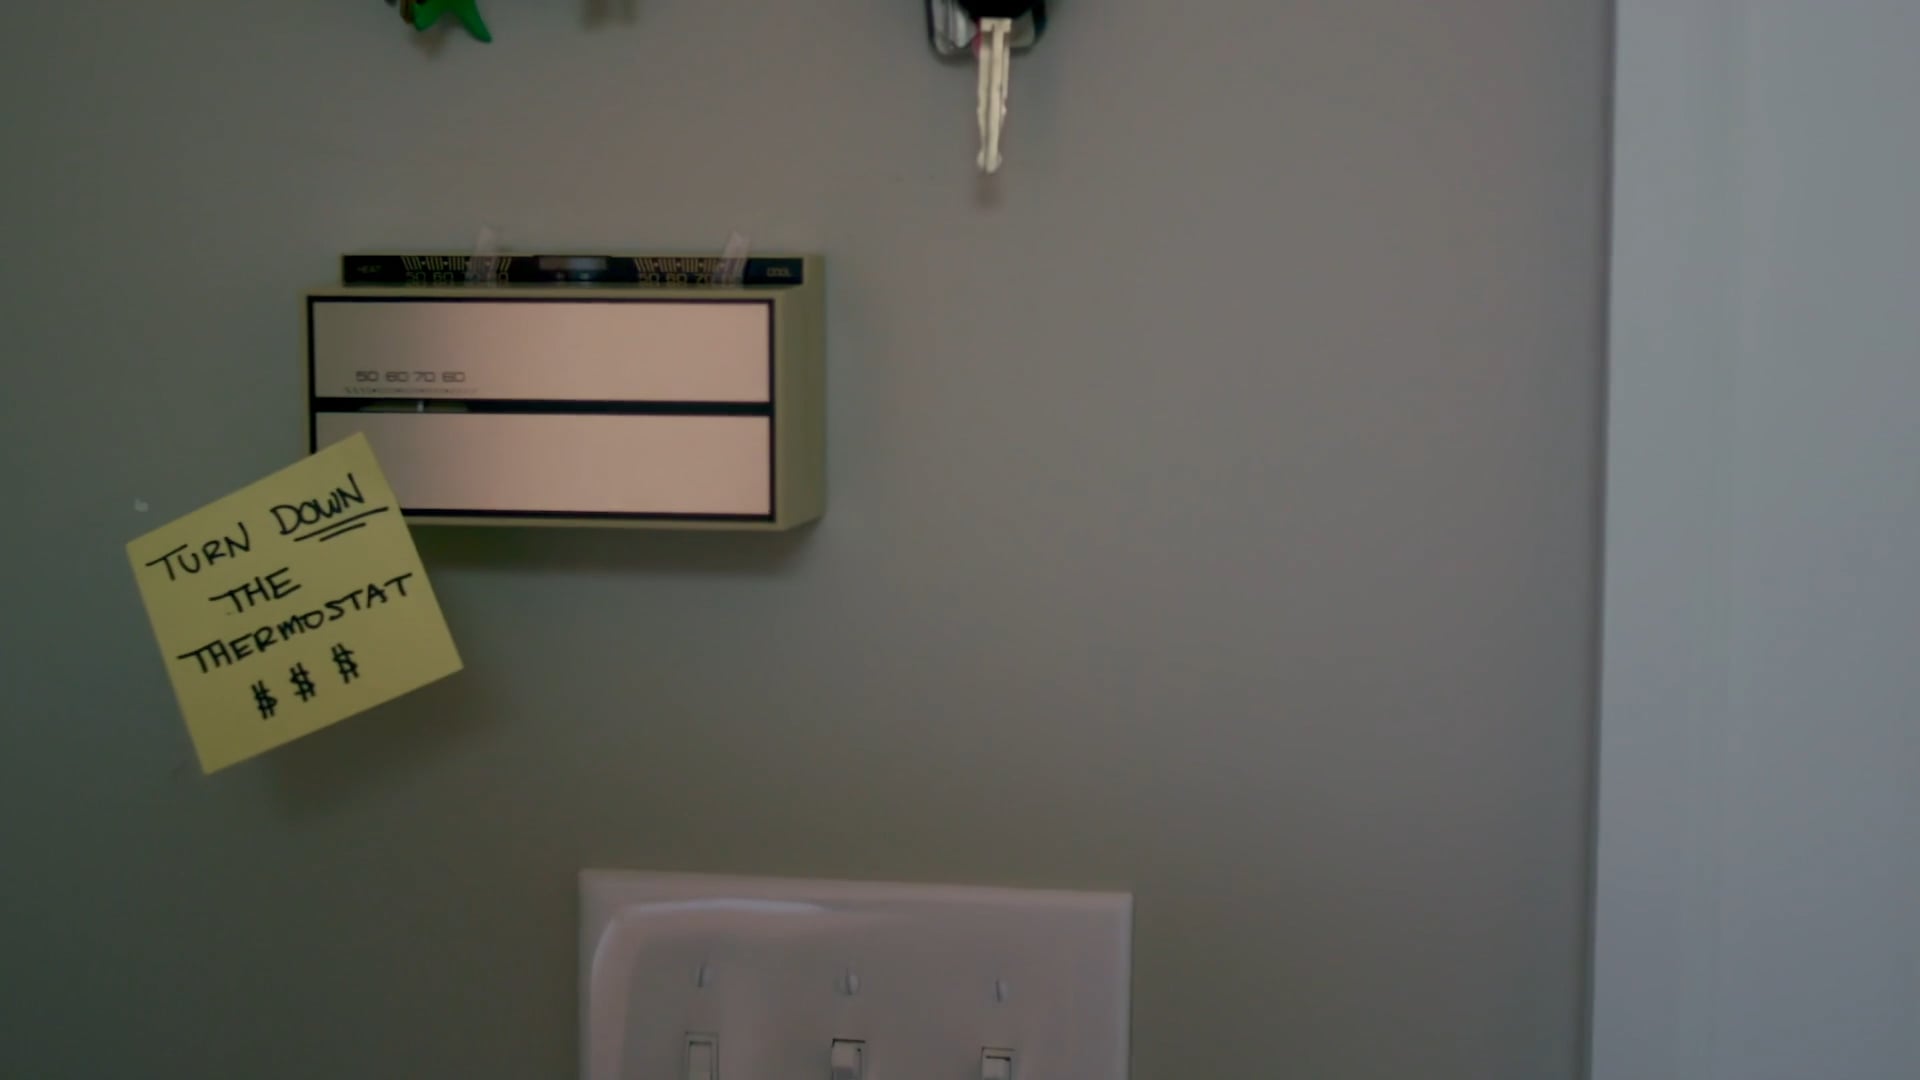 bge-sesp-tellys-bge-smart-thermostats-on-vimeo